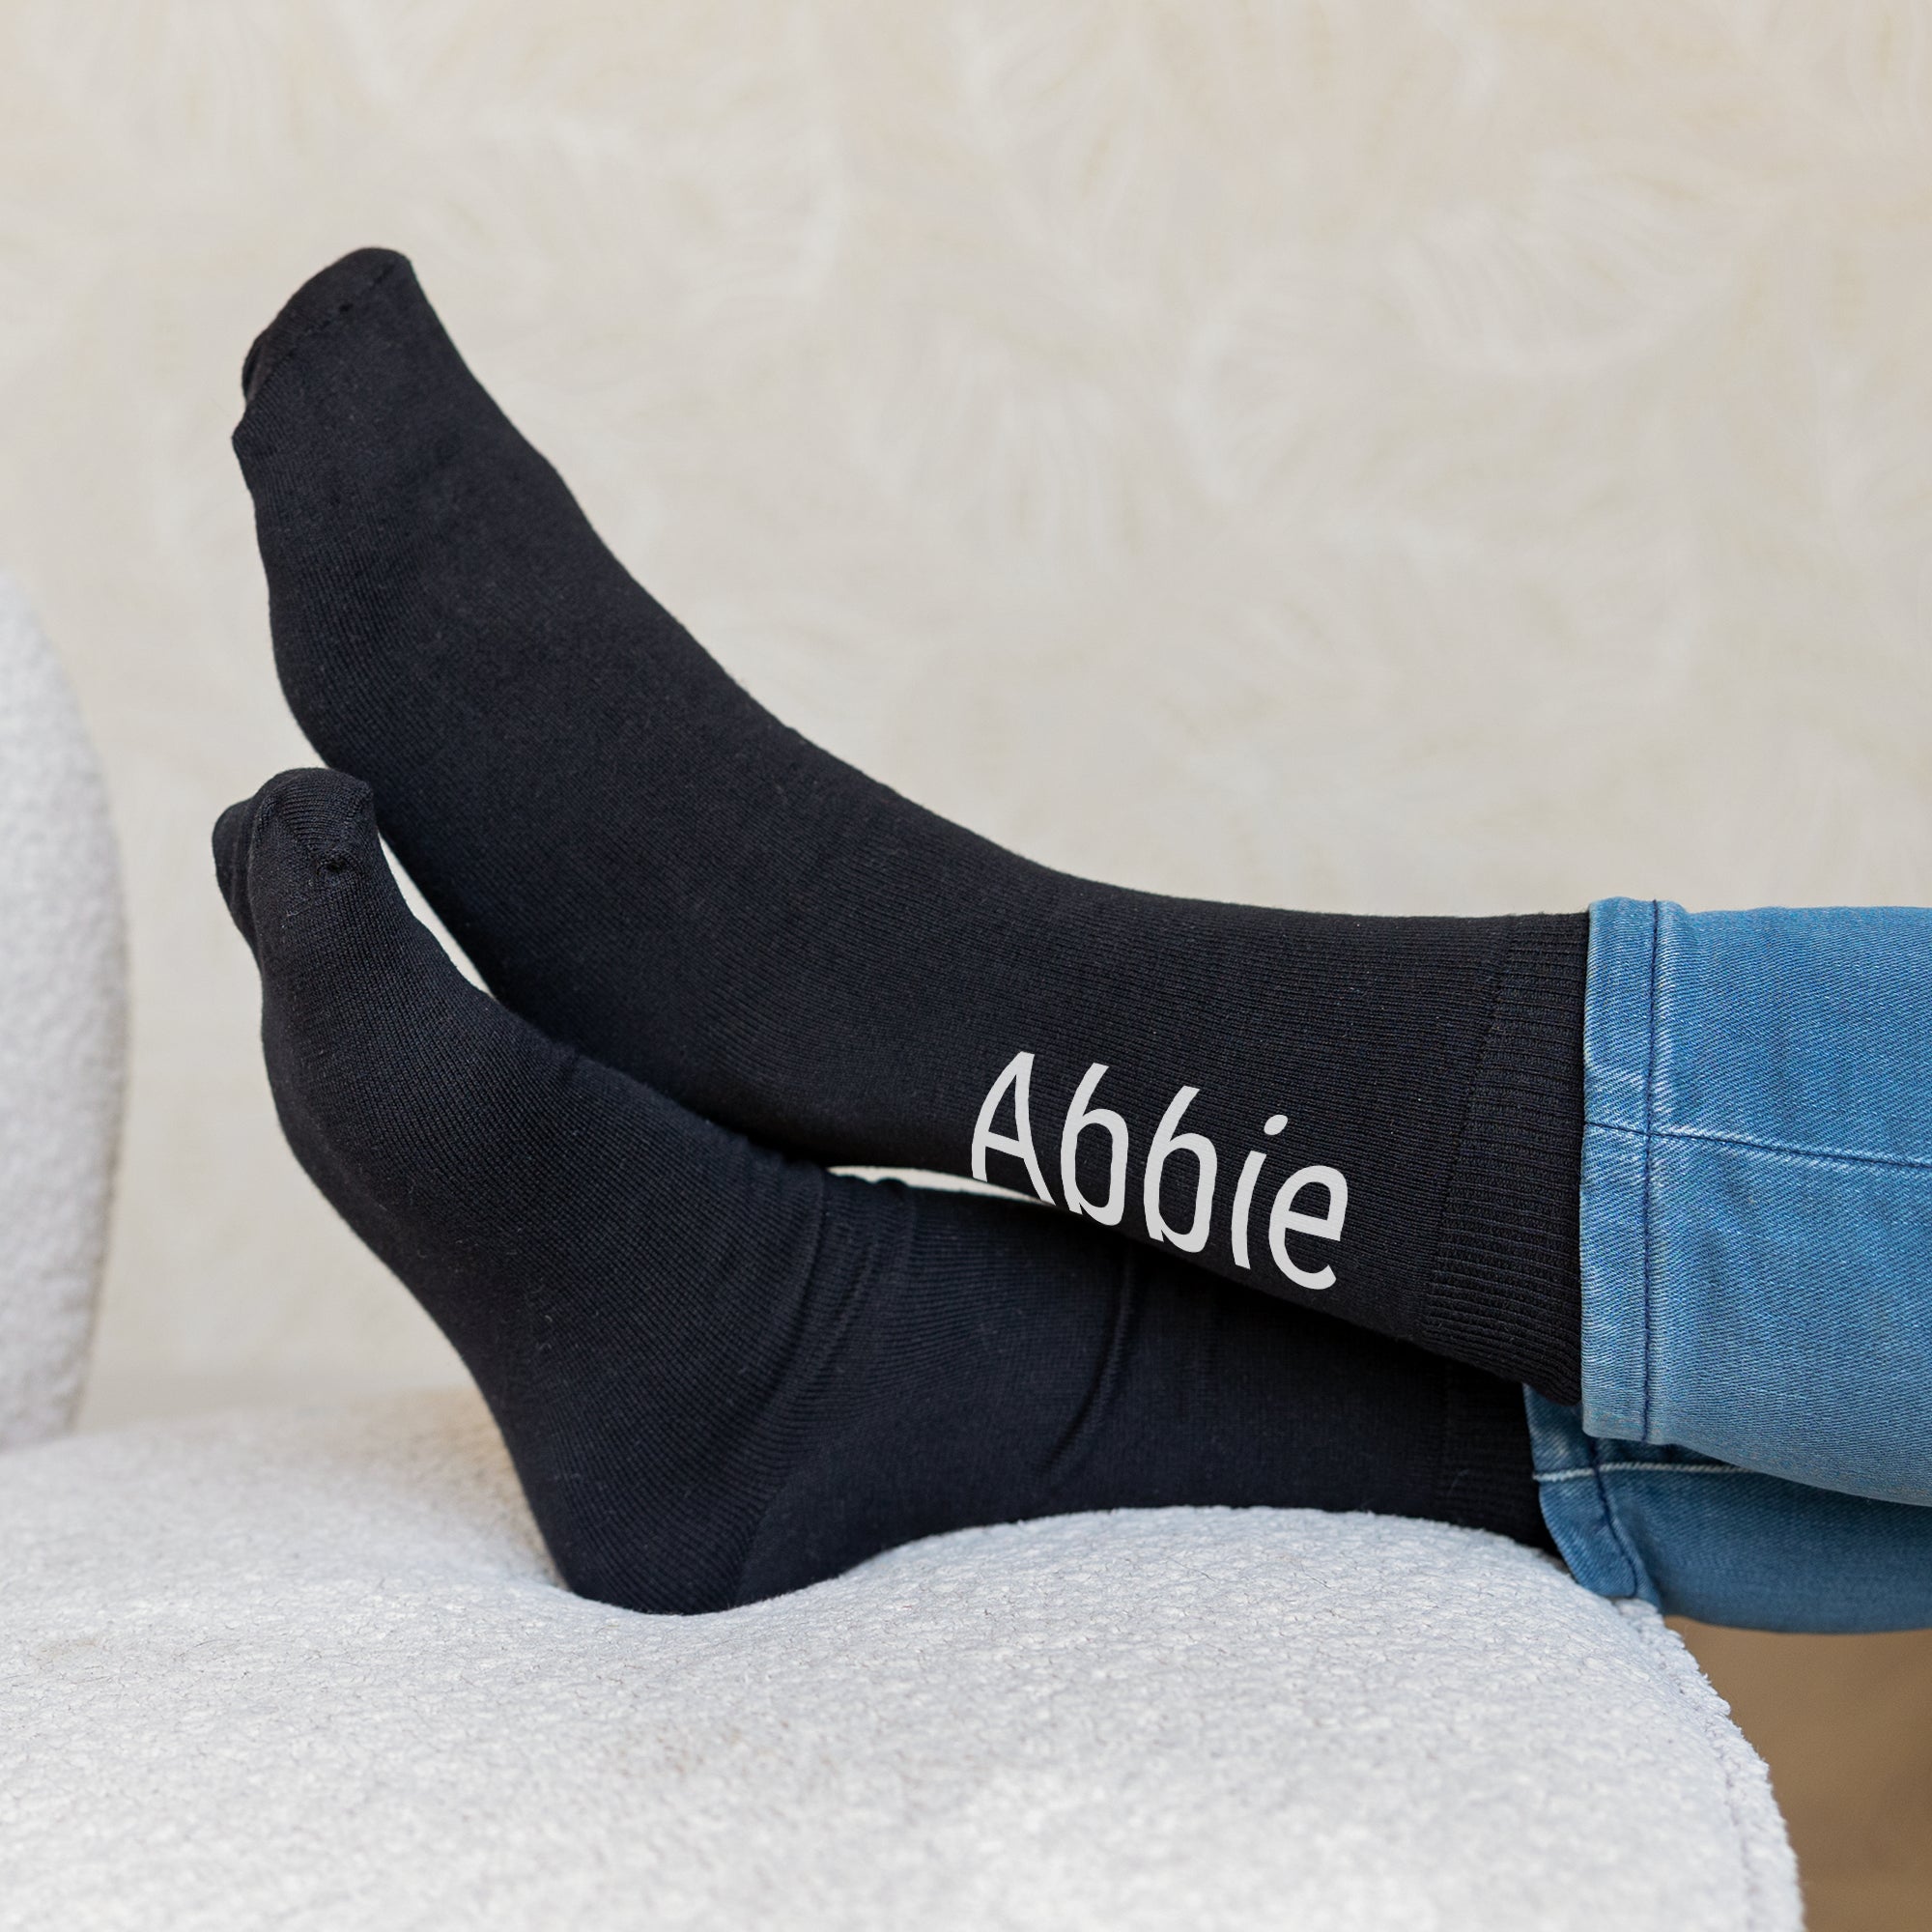 Personalised socks - Size 35-38